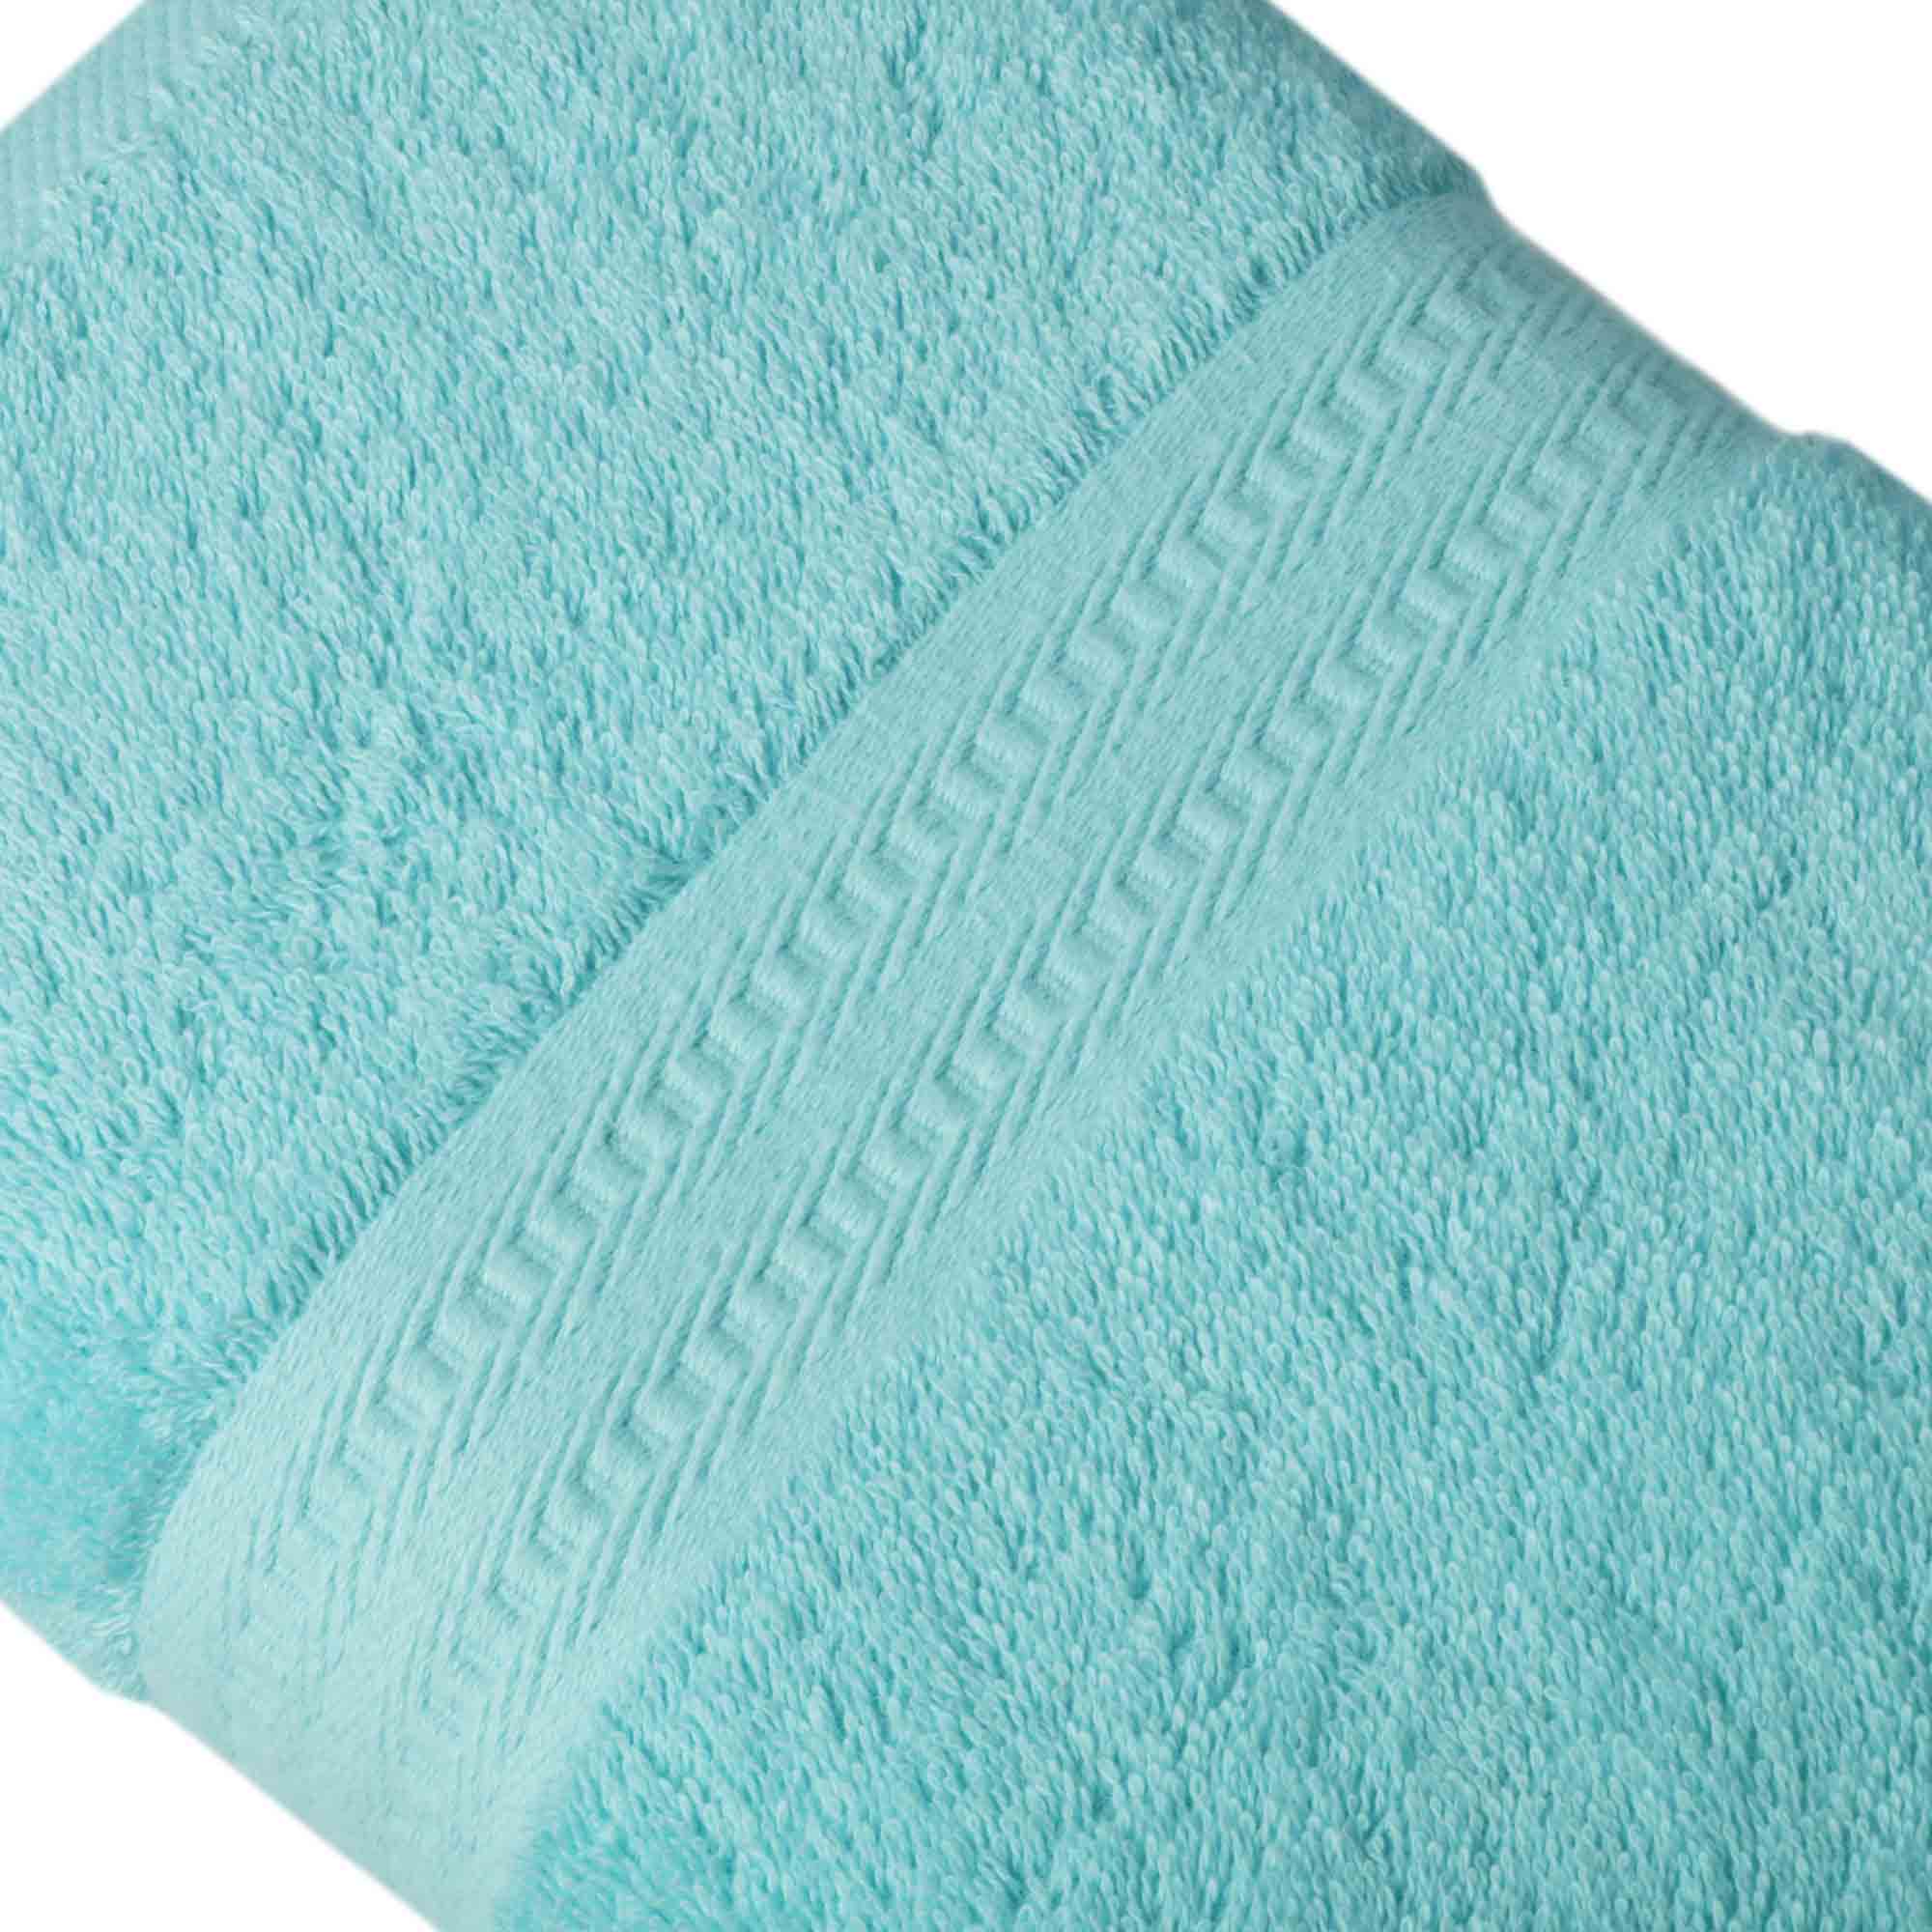 Eclat - 4 Piece Bath Towel Set